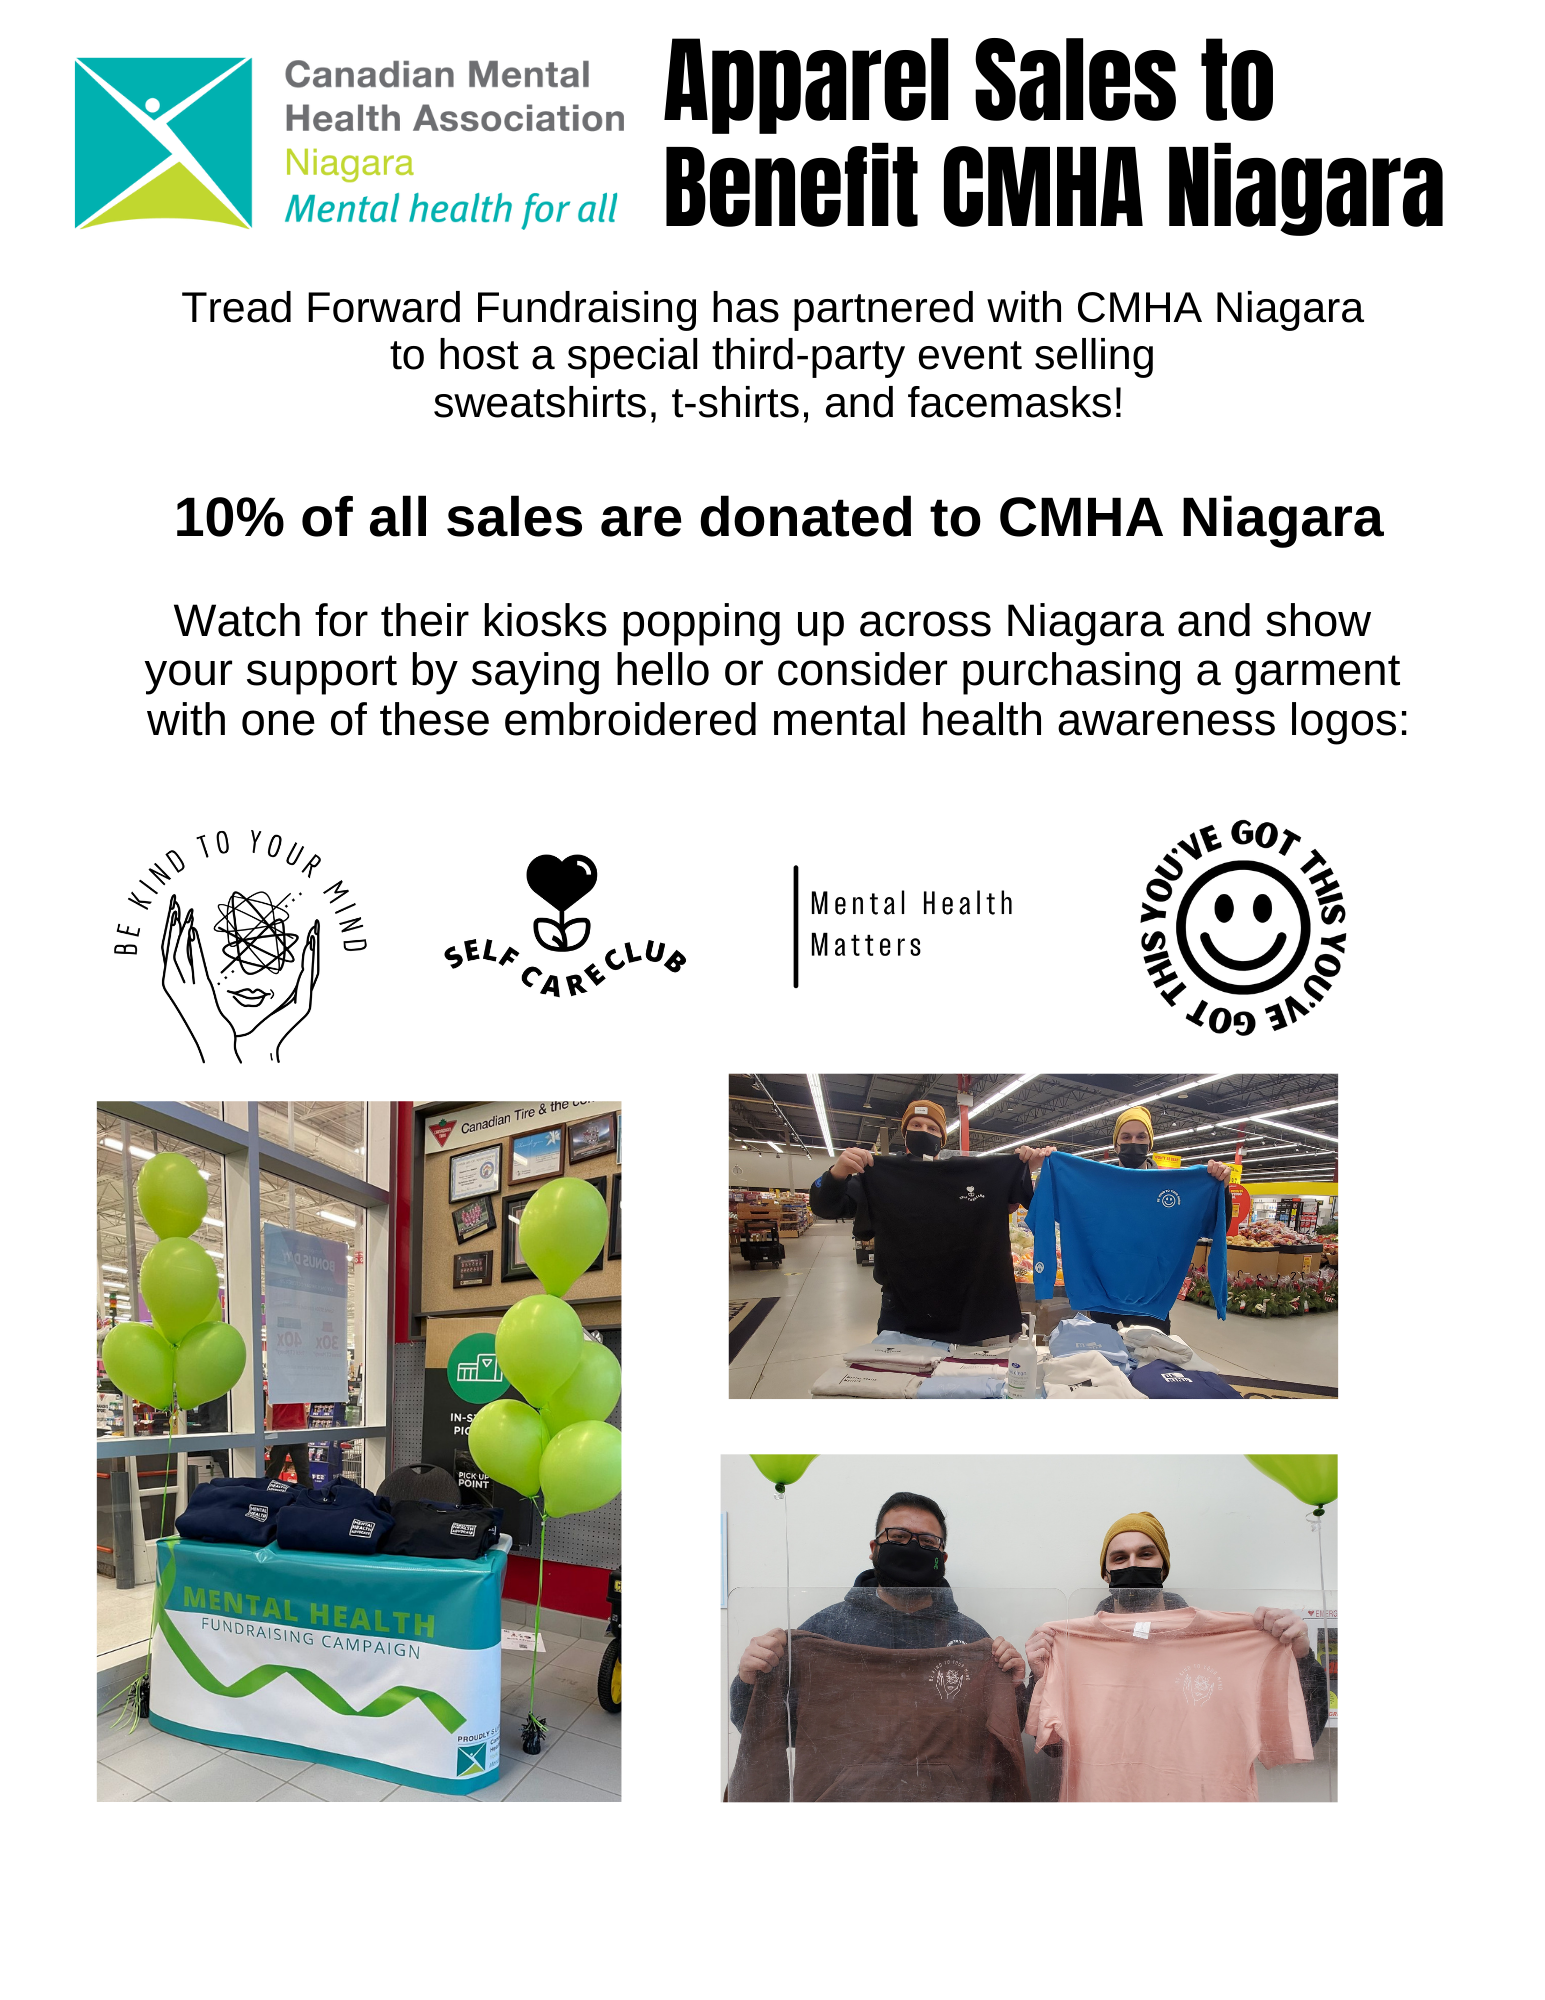 Apparel Sales to benefit CMHA Niagara flyer details